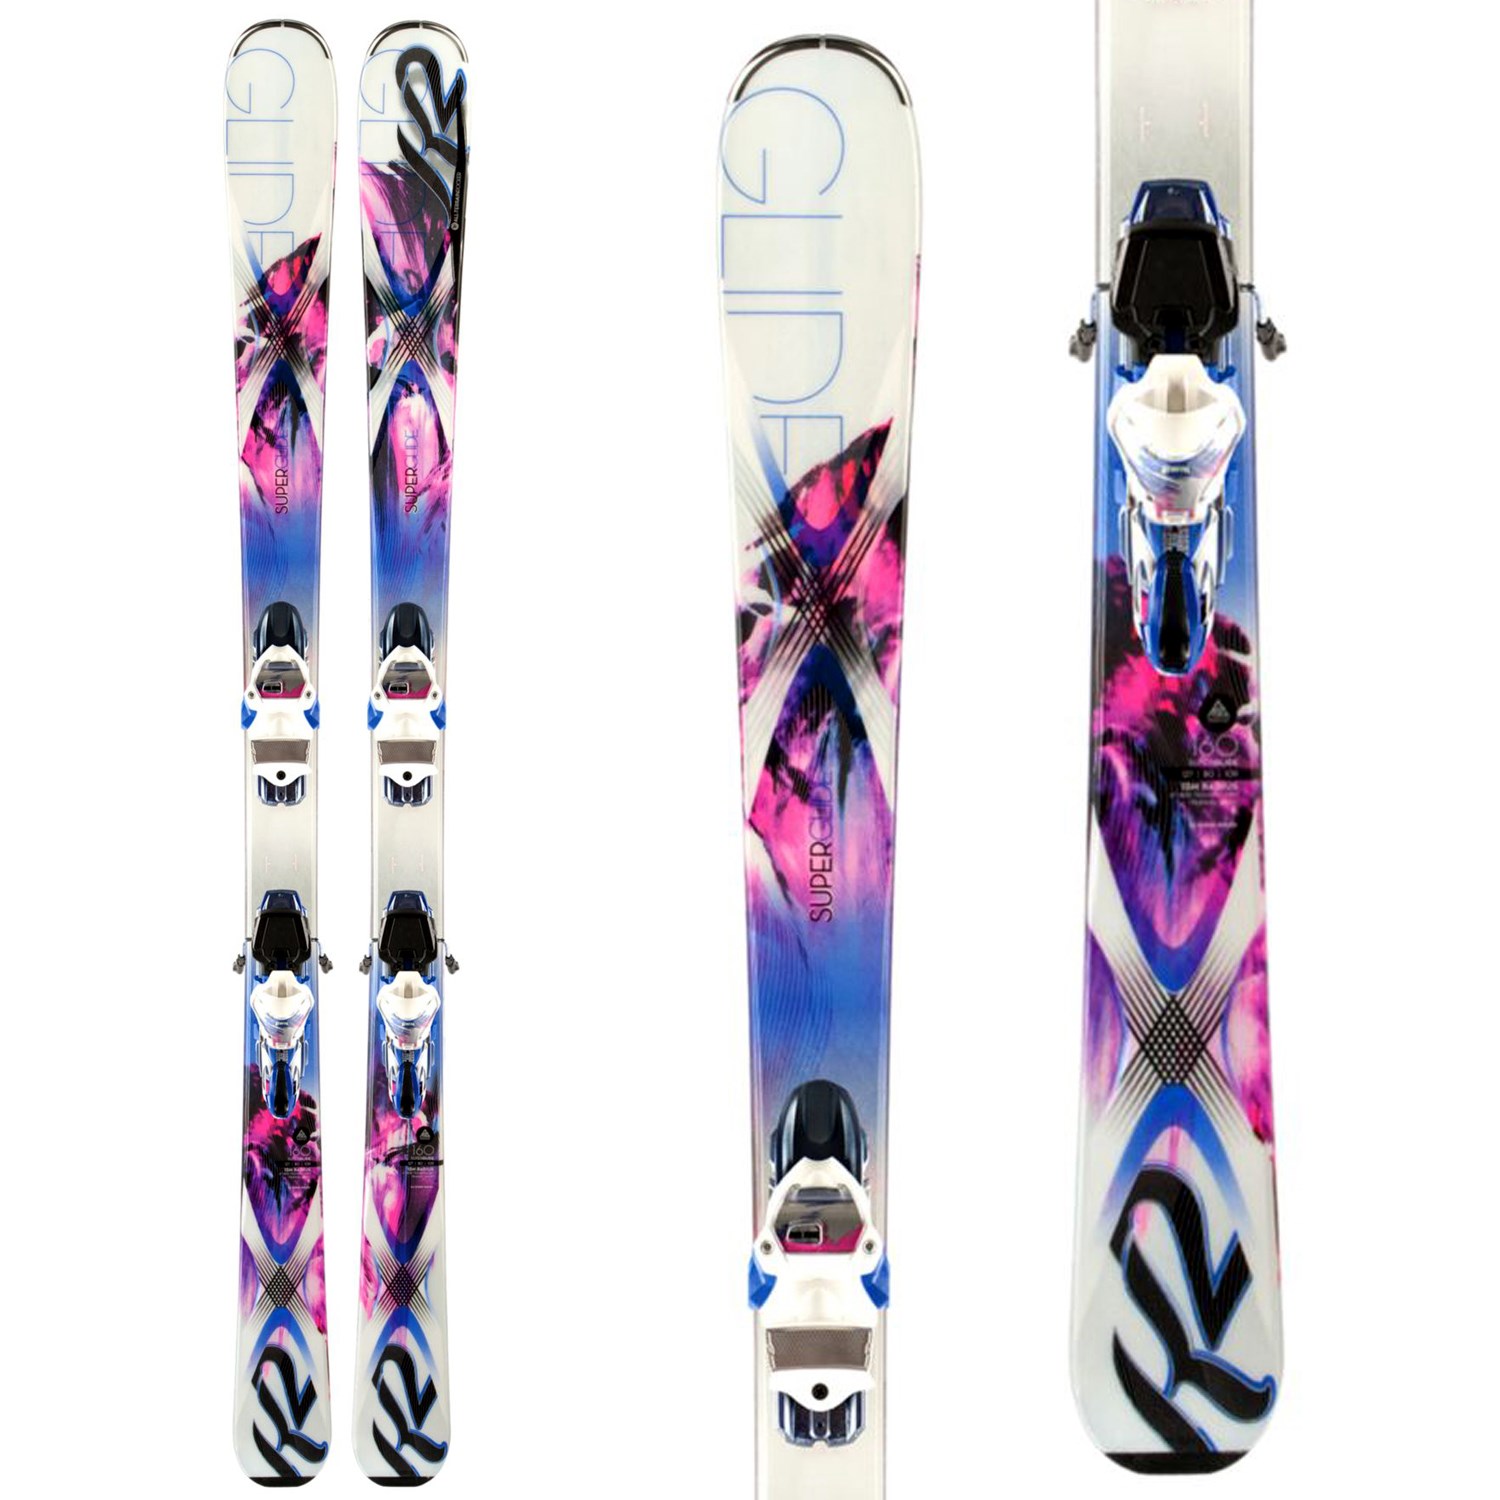 K2 Superglide 80 Skis Erc 110 Tc Bindings Womens 2014 Evo throughout Ski And Snowboard Shop Columbus Ohio